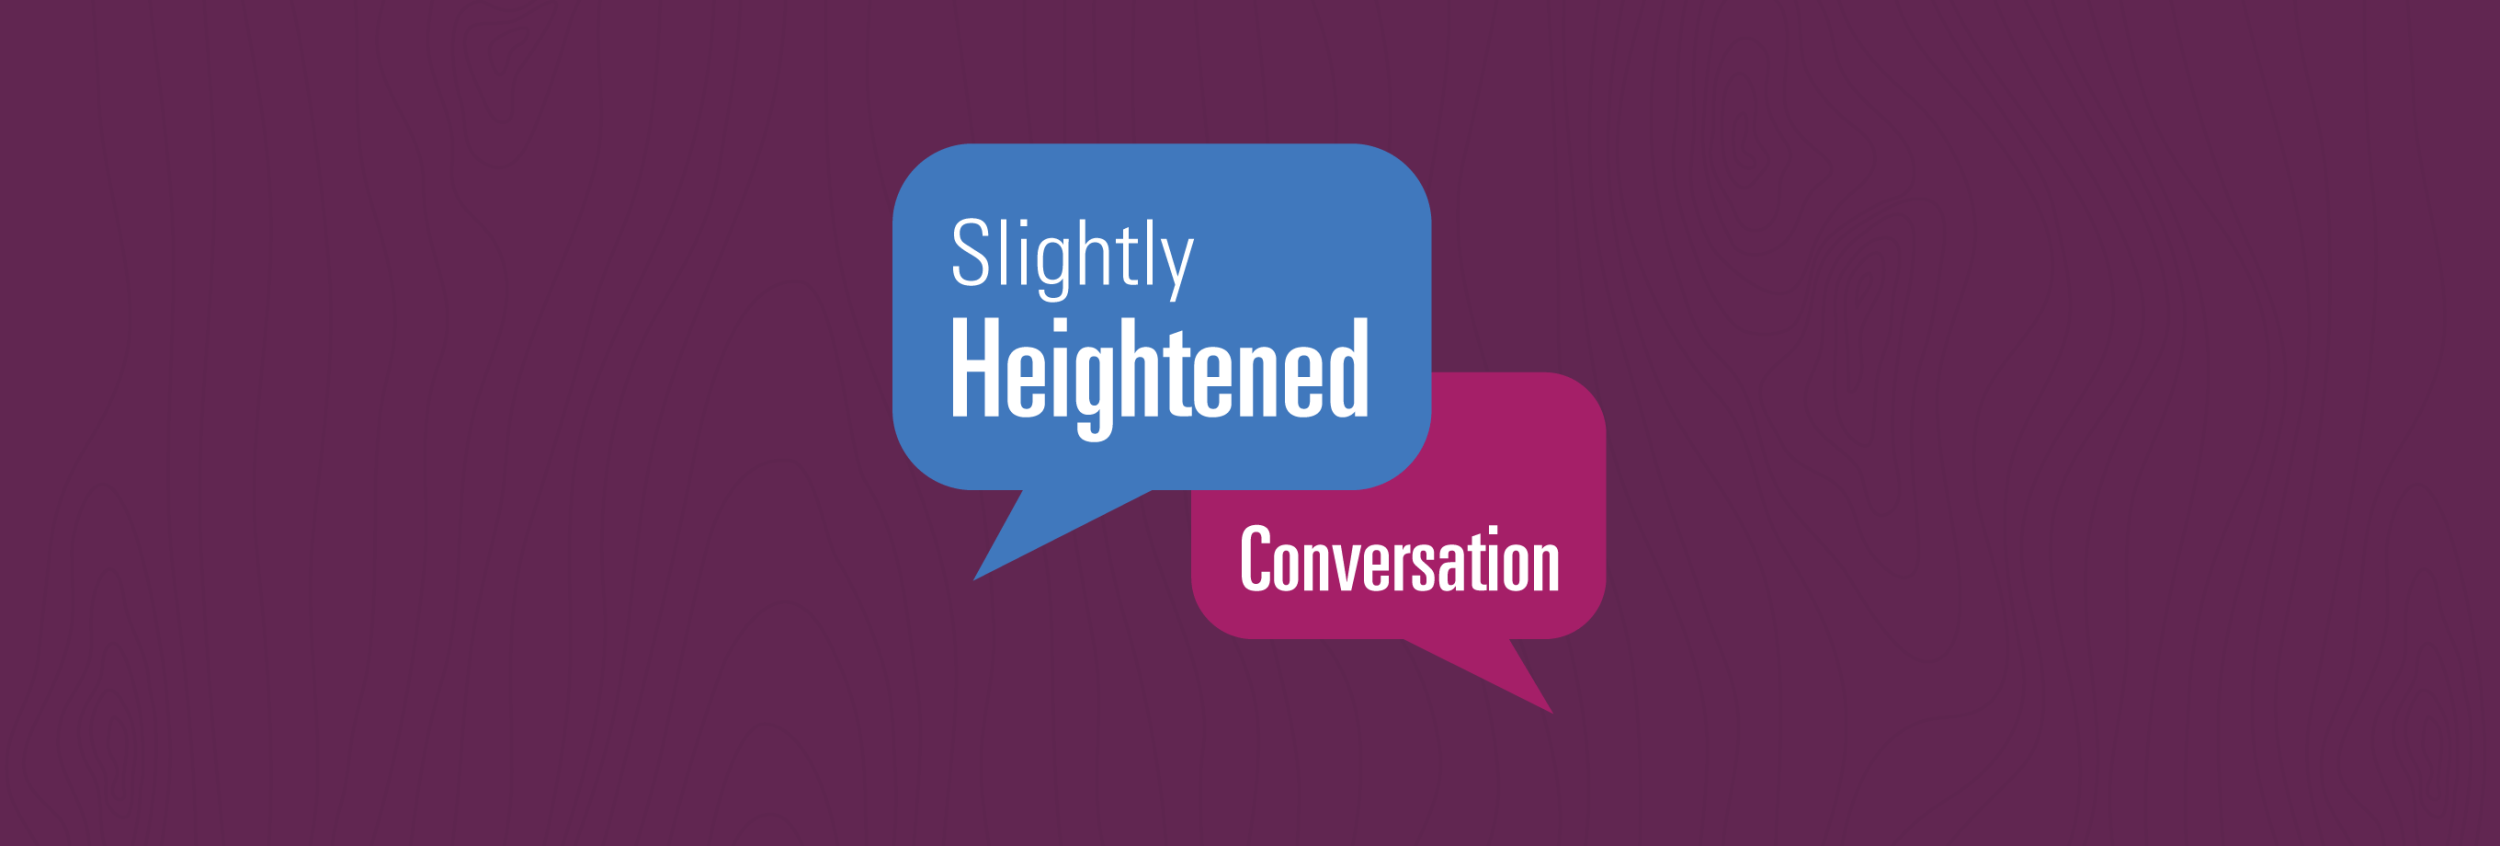 Slightly Heightened Conversation - Mixed Berry